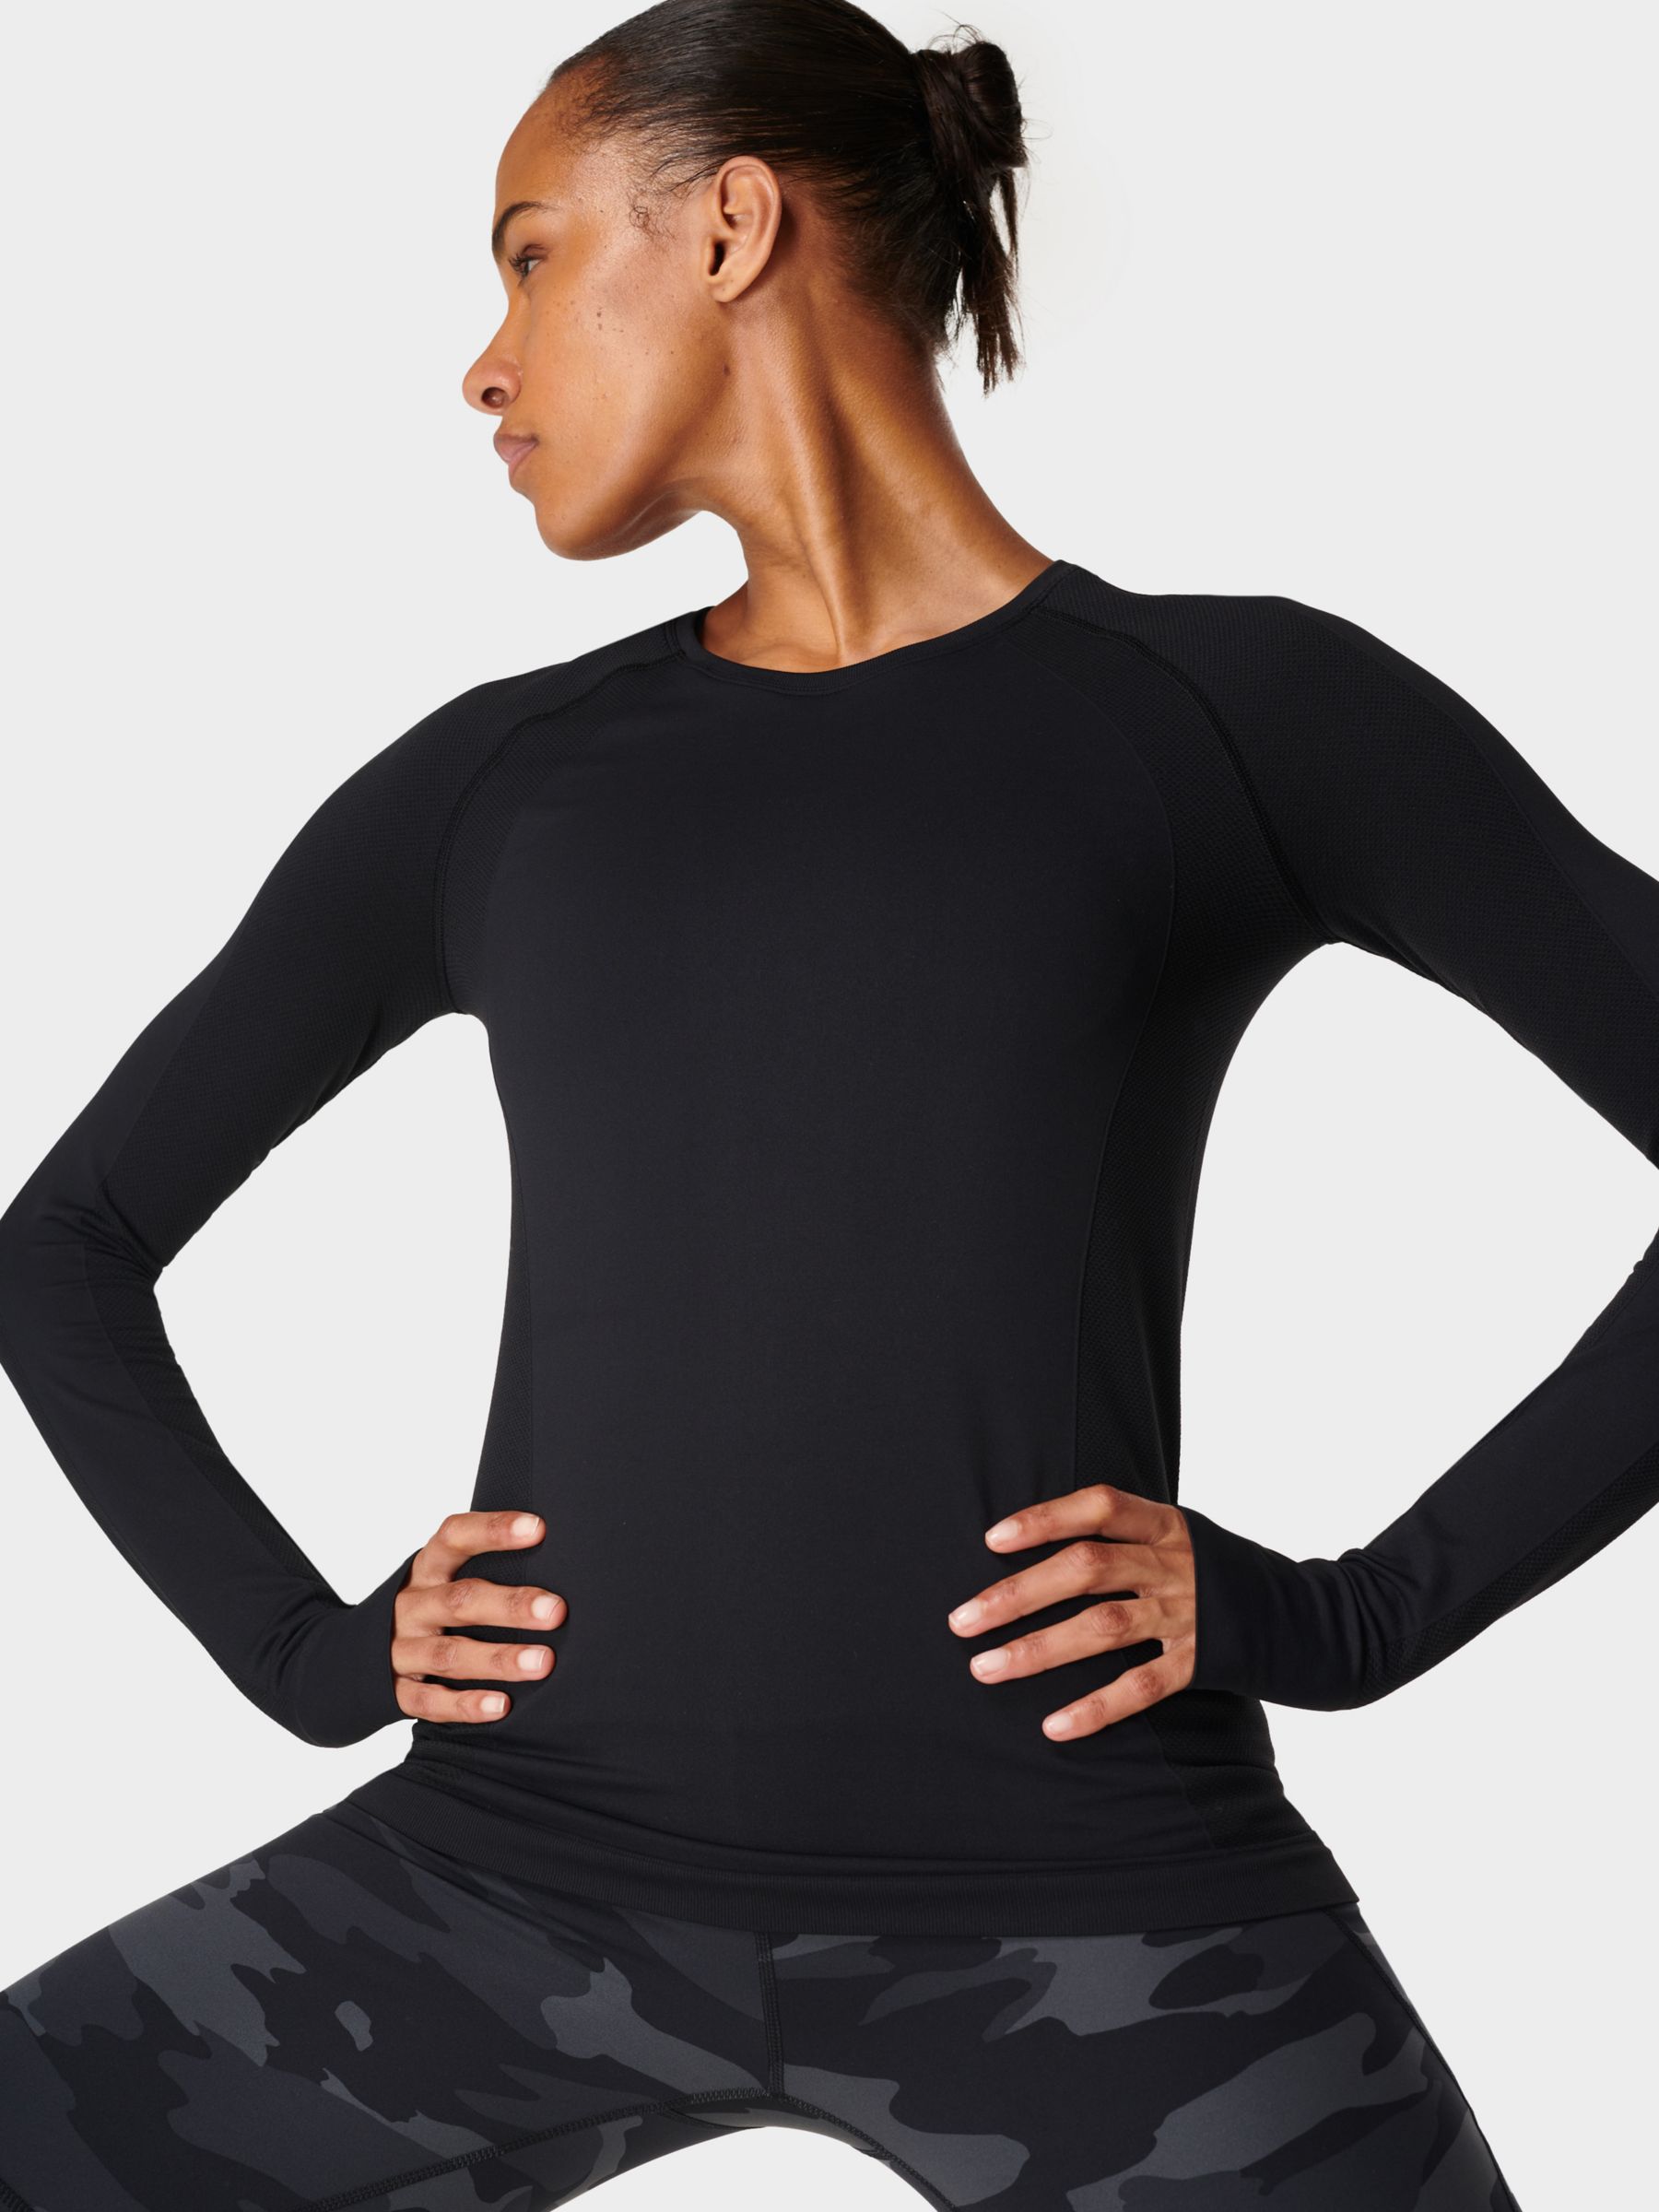 Women's Shape Seamless Long-Sleeve Top, Black